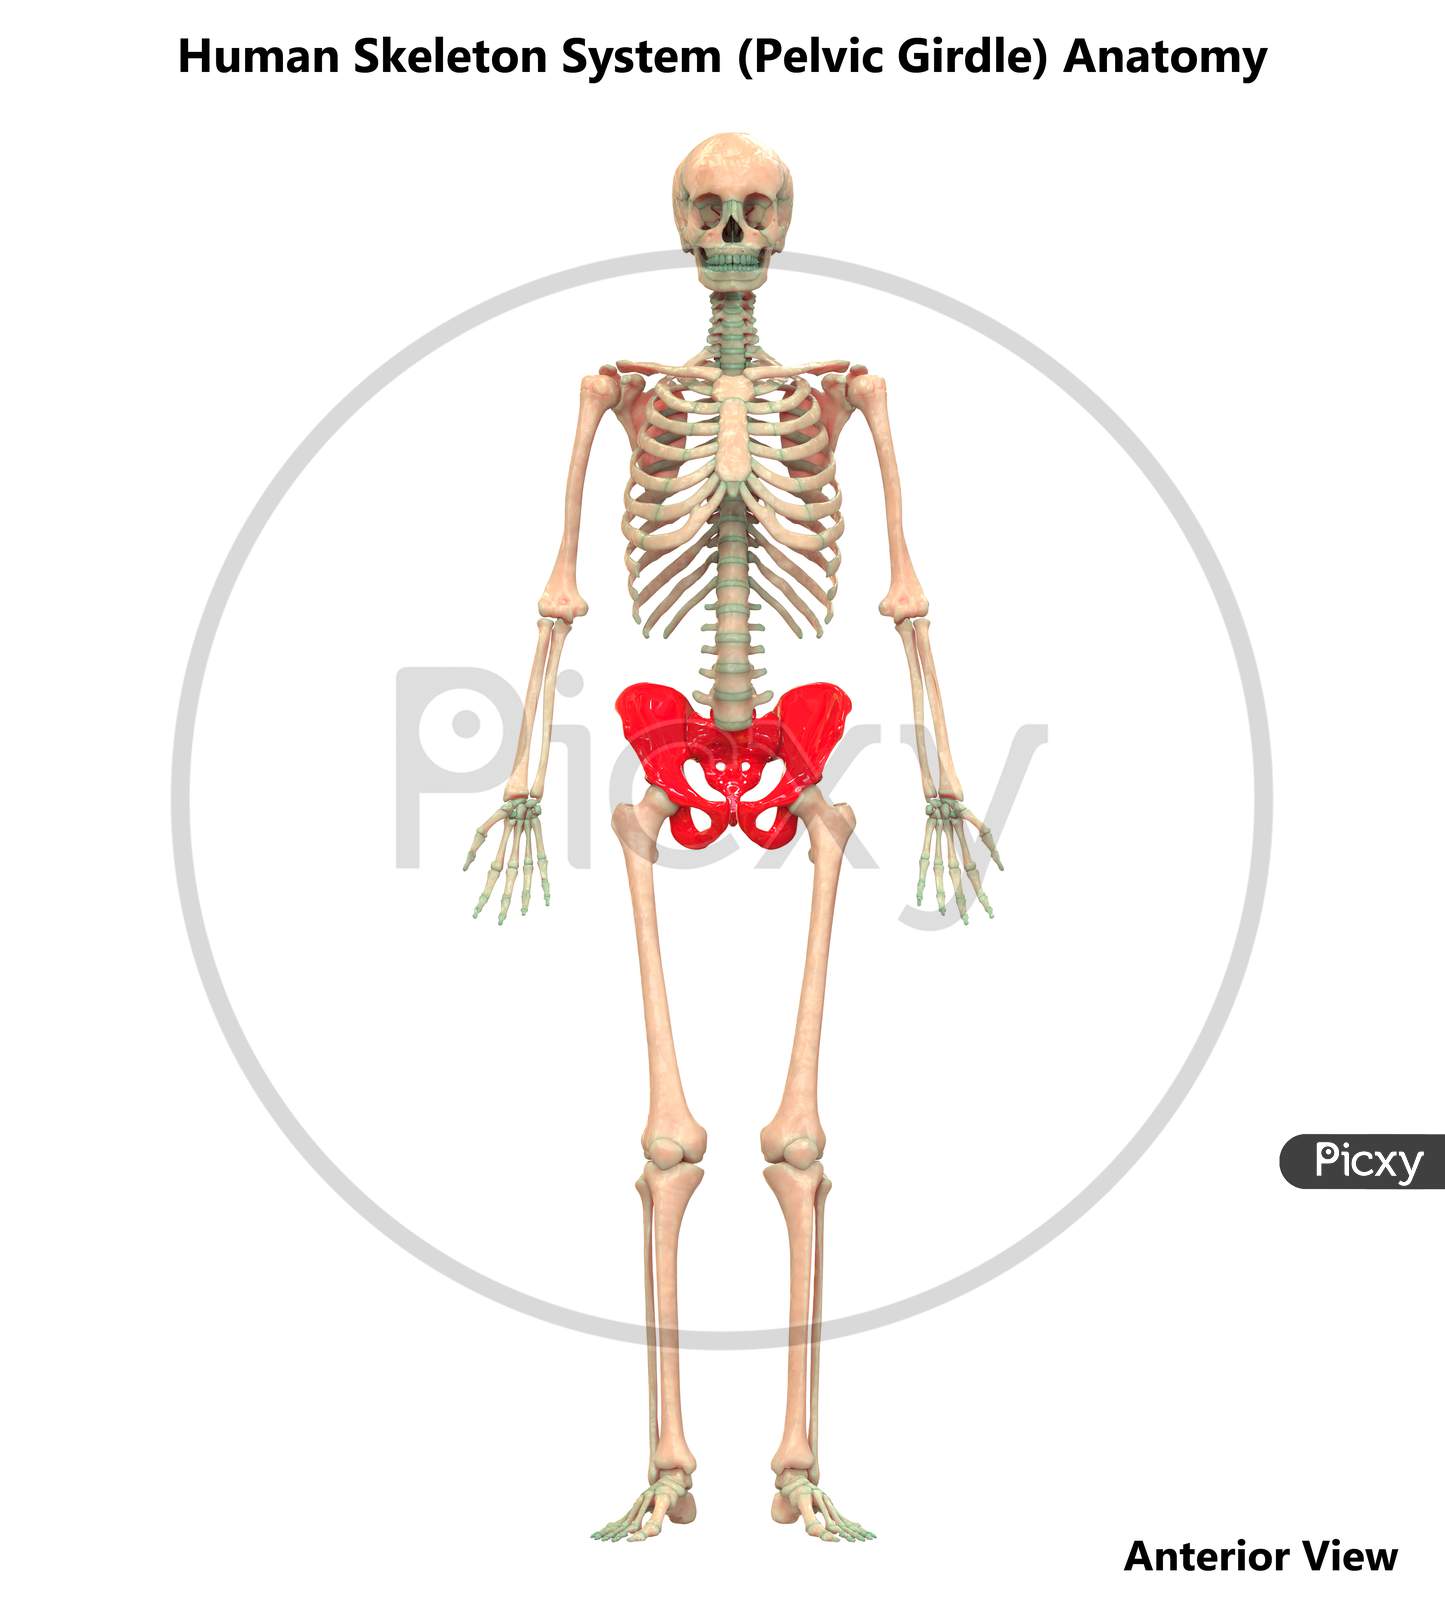 Human Skeleton System Anatomy (Pelvic Girdle)